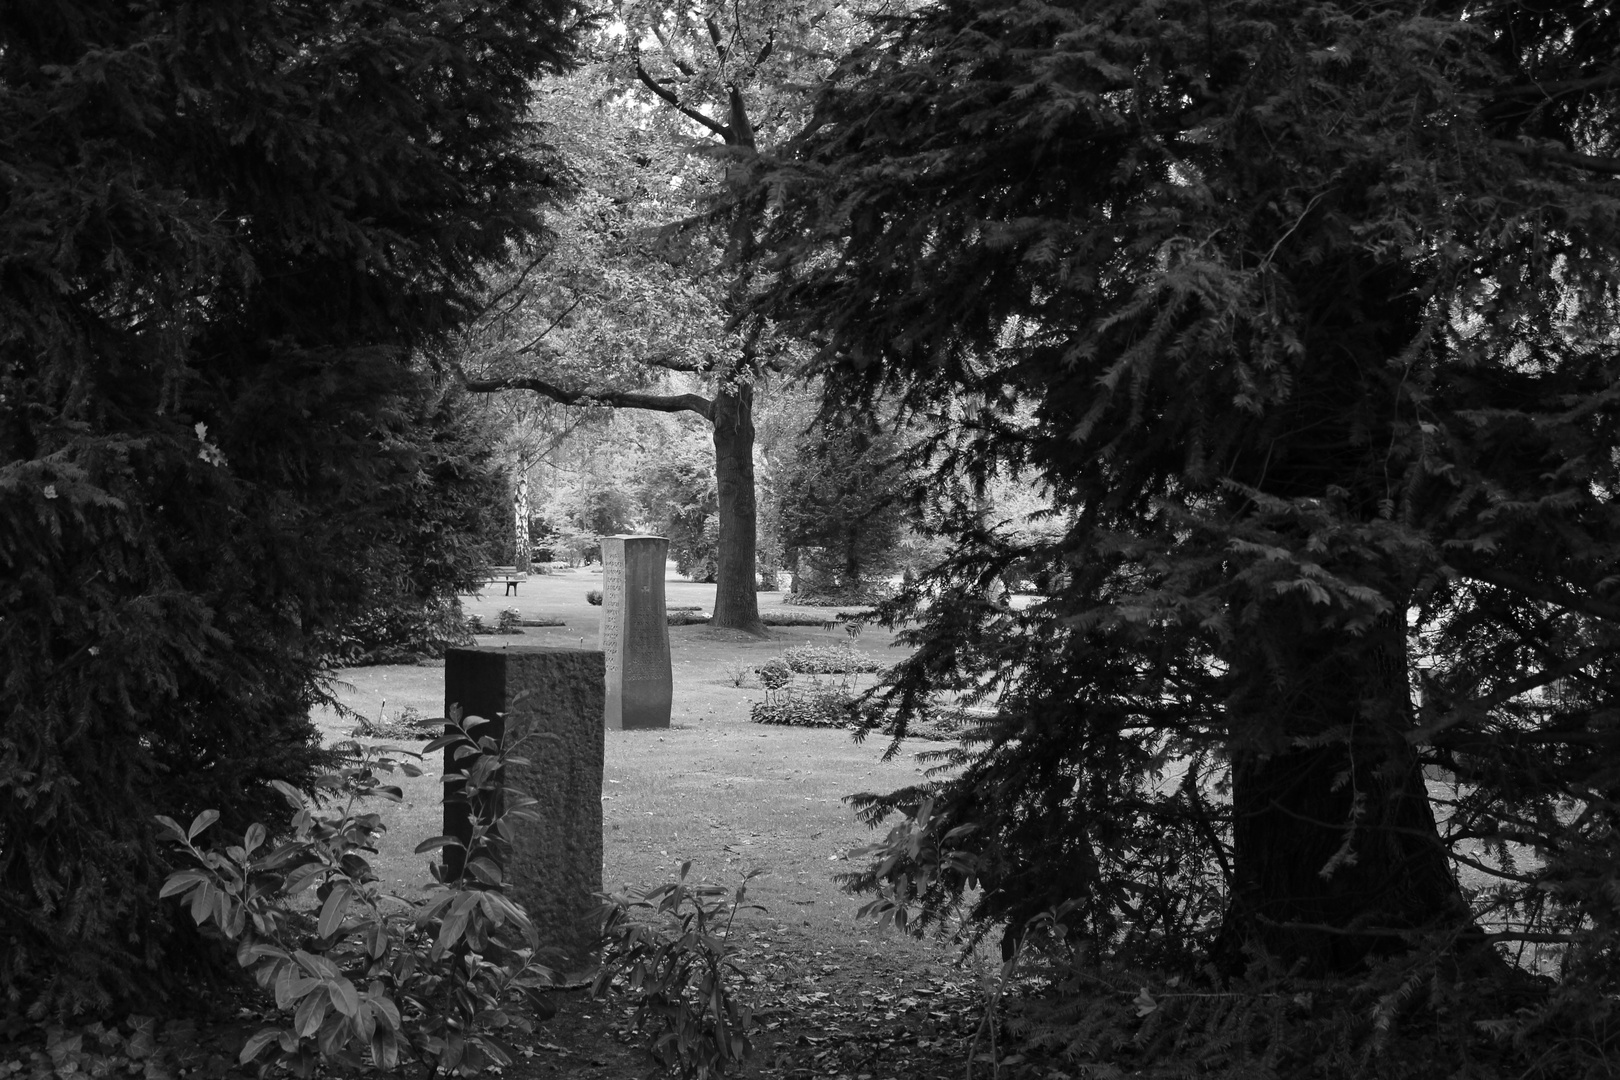 Ausblick auf dem Friedhof